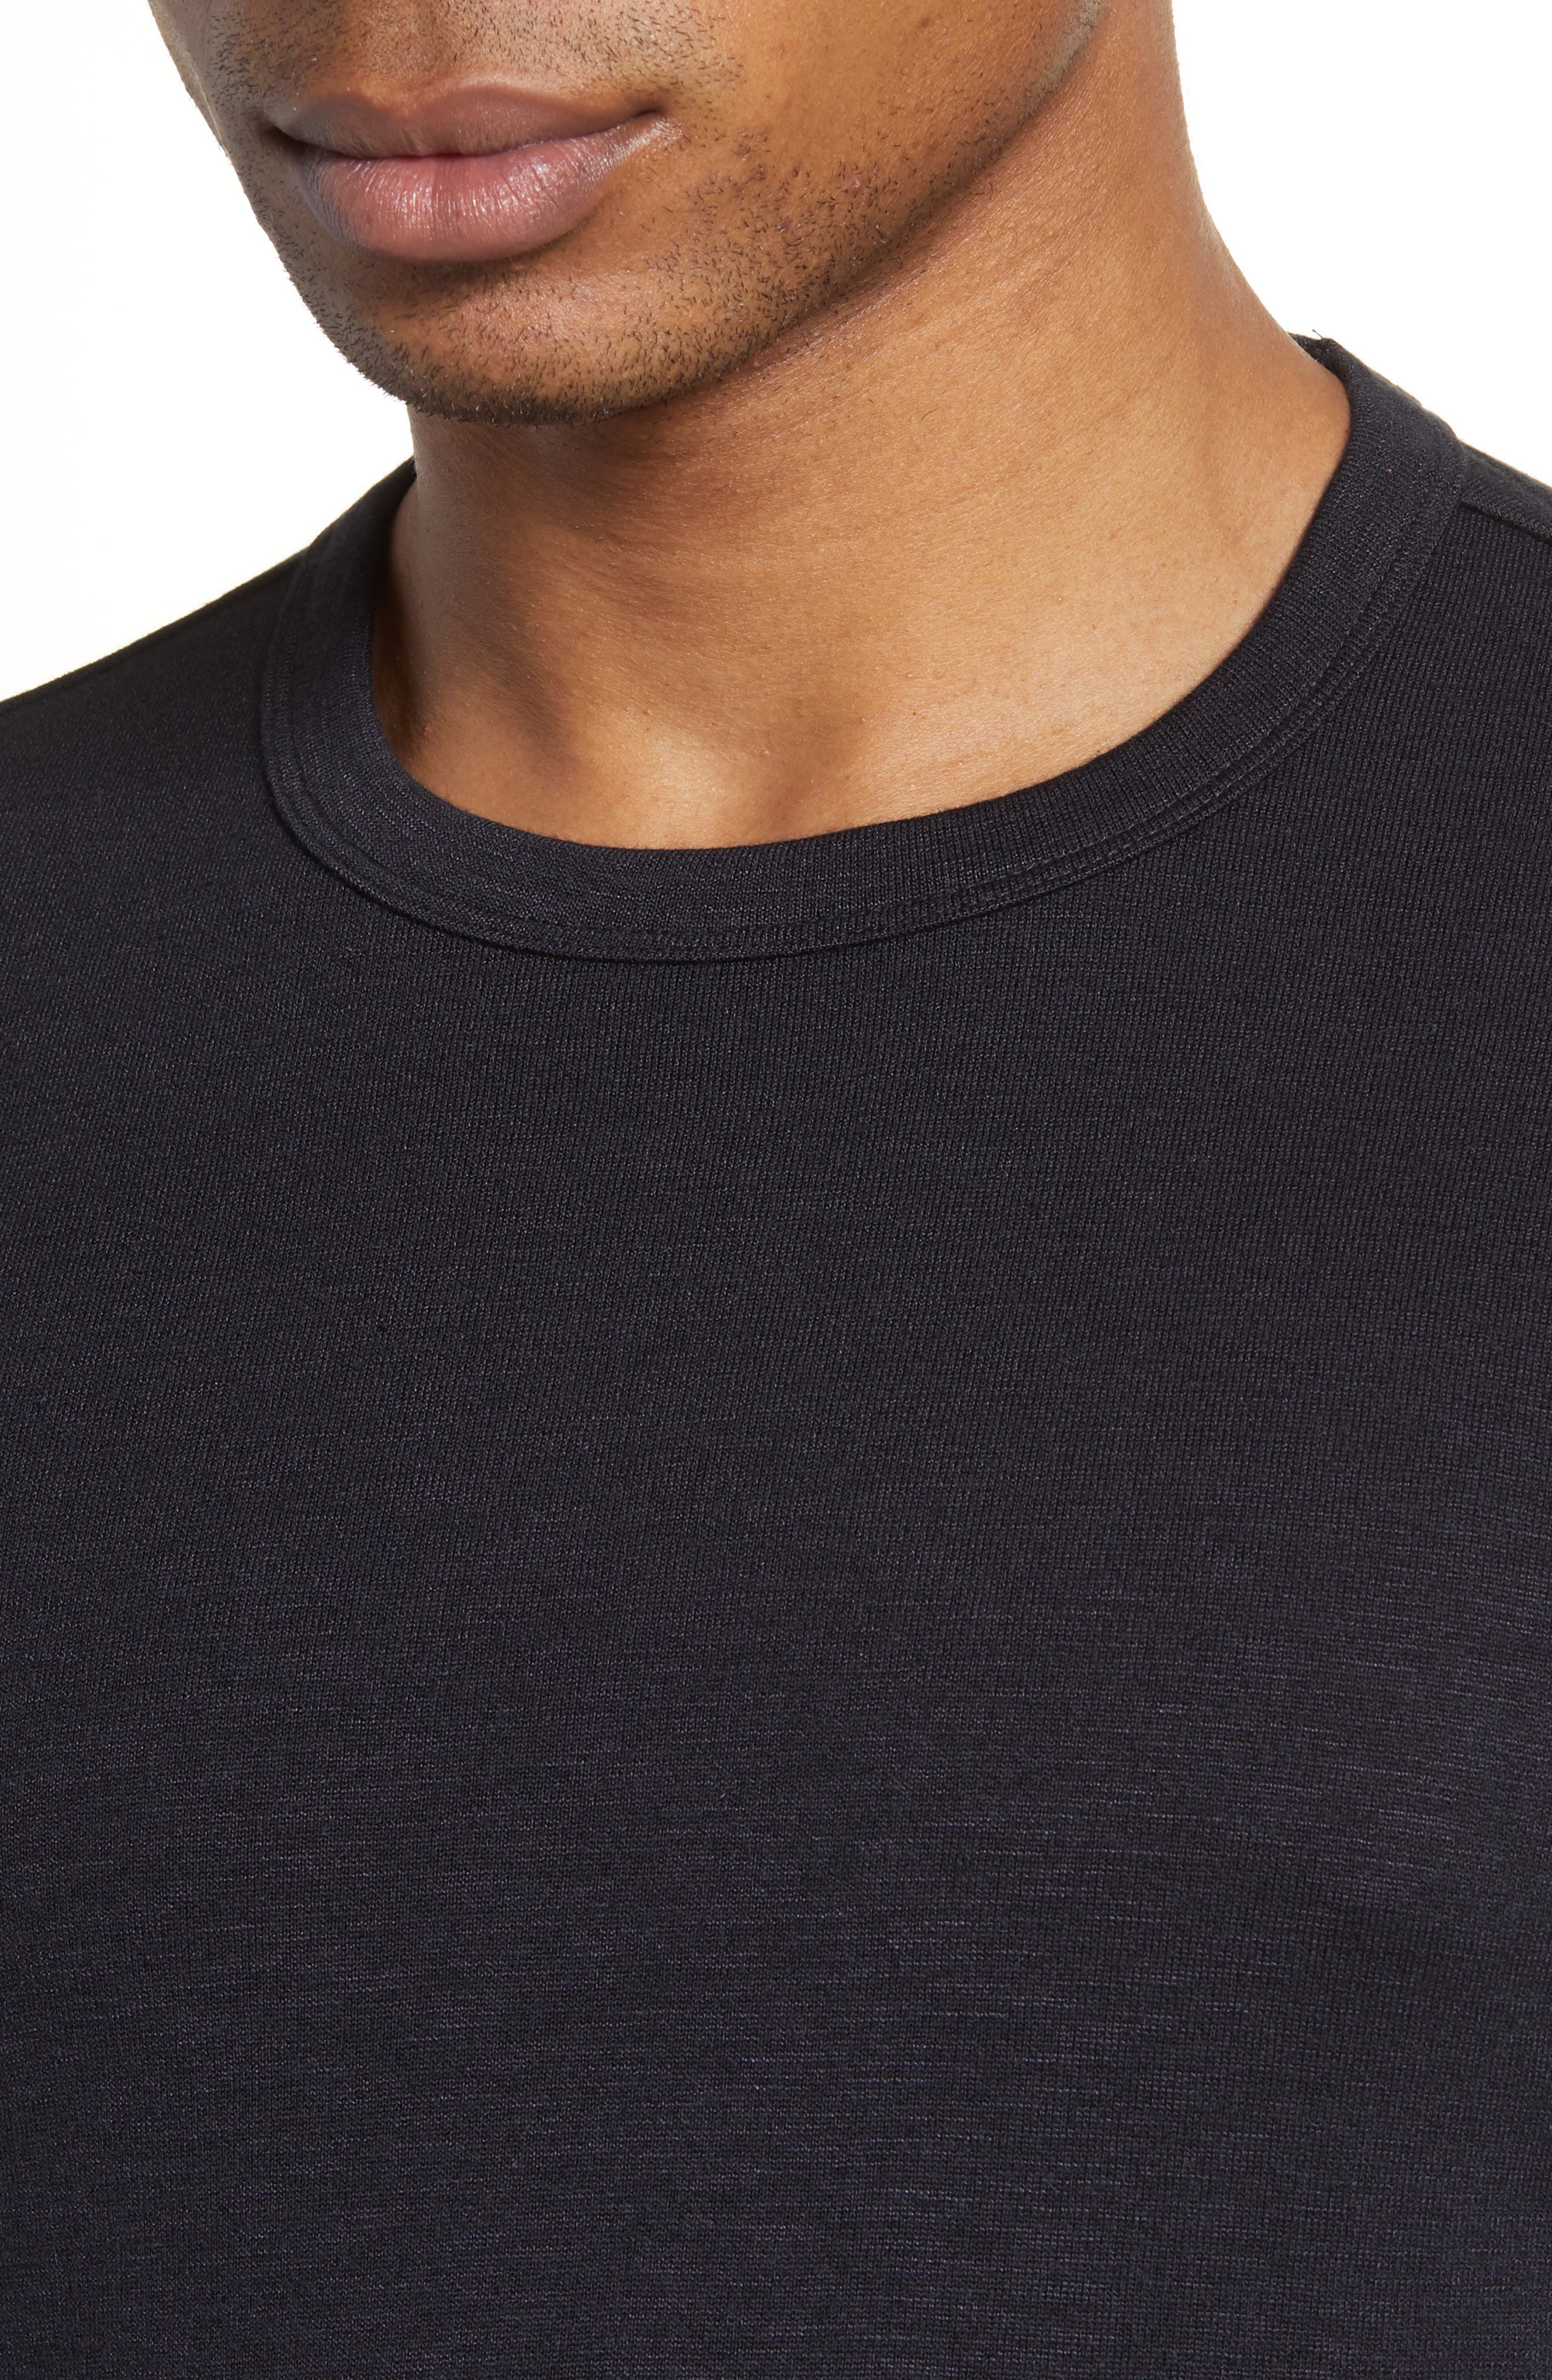 nordstrom-men-s-shop-long-sleeve-t-shirt-nordstrom-rack